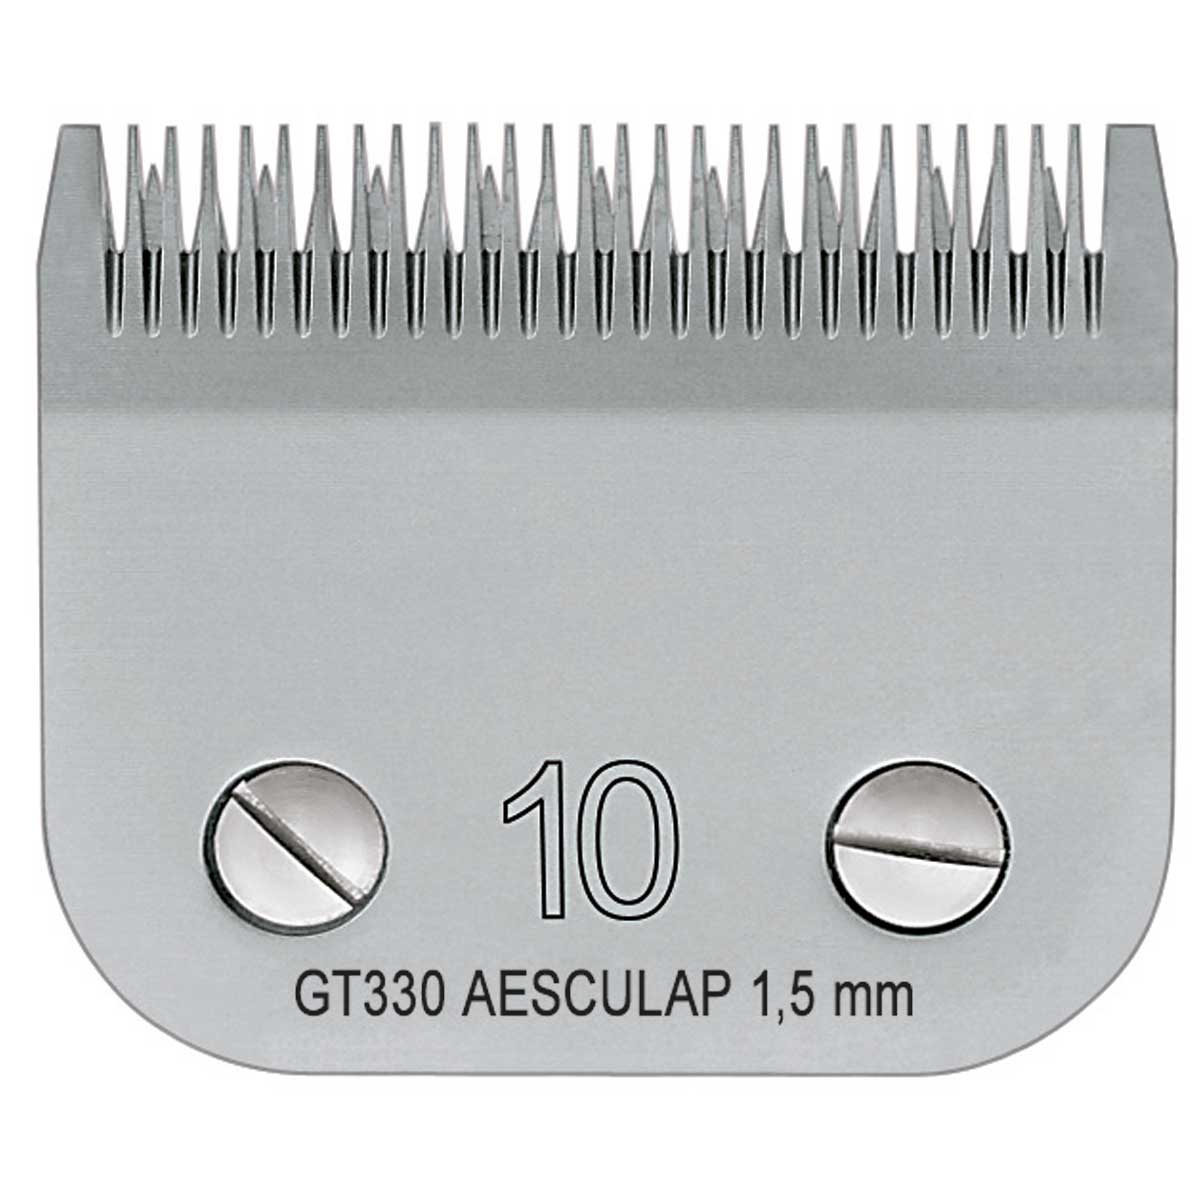 Aesculap Testina per tosatrici SnapOn compatibile 1,5 mm, GT330 #10